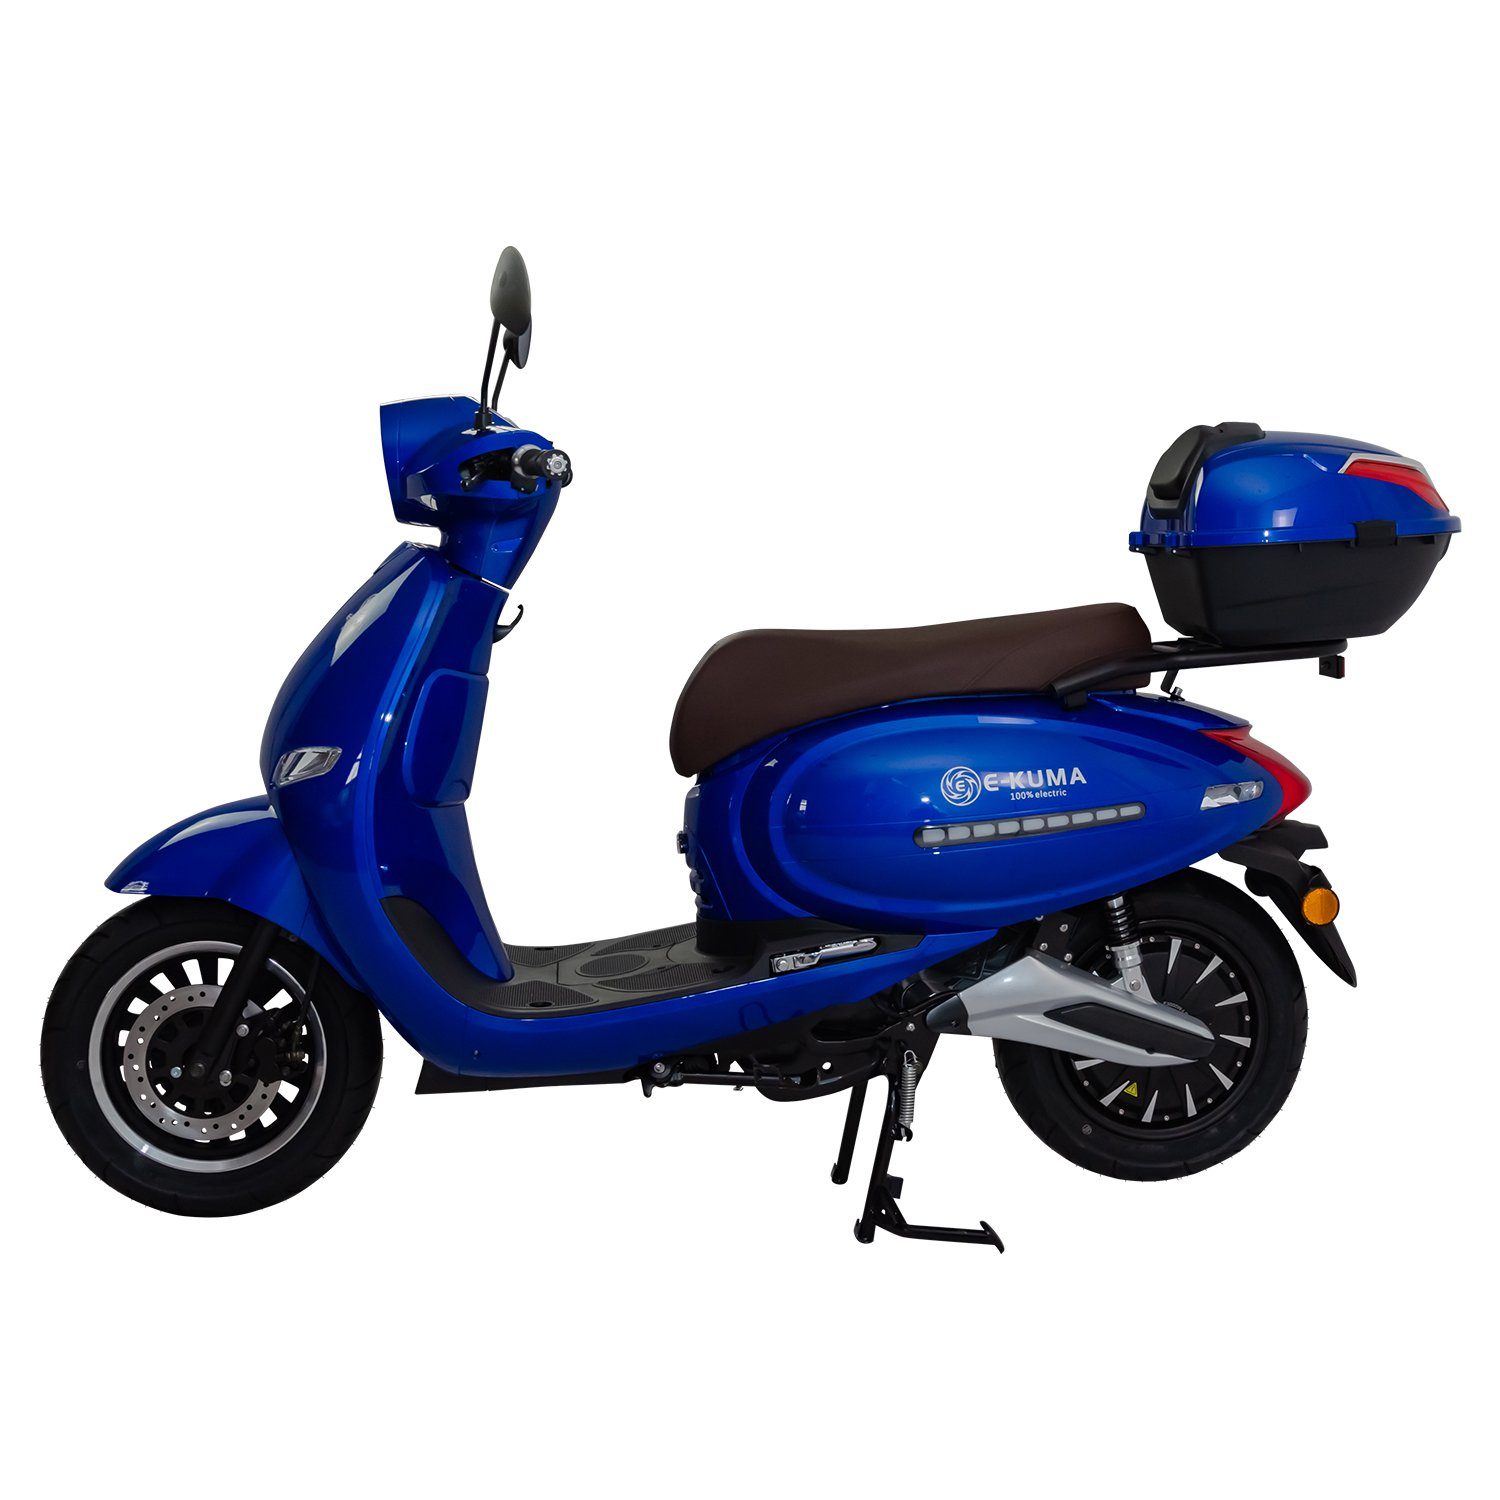 Akku 60V23,4 Ah blau 1x inklusive 45 e-kuma Topcase, inklusive E-Motorroller 3800 km/h, Sun, W,